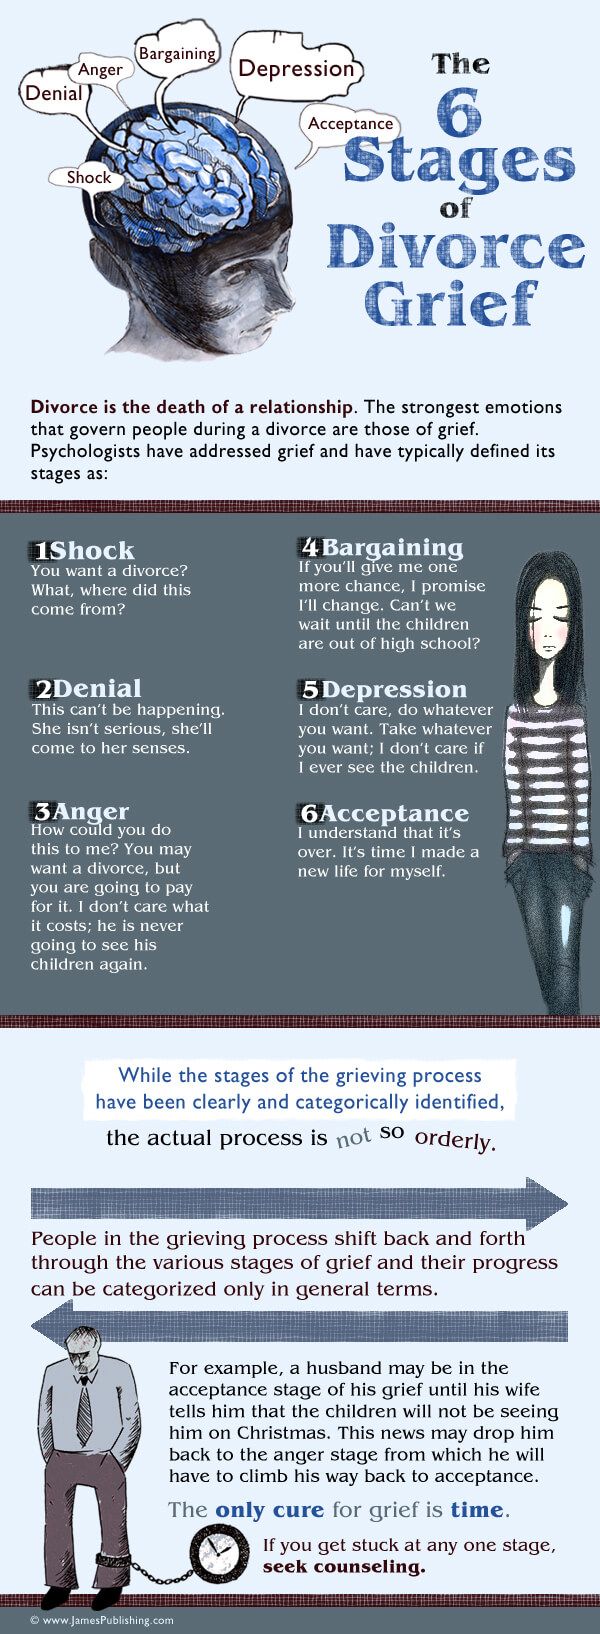 6 stages of divorce grief